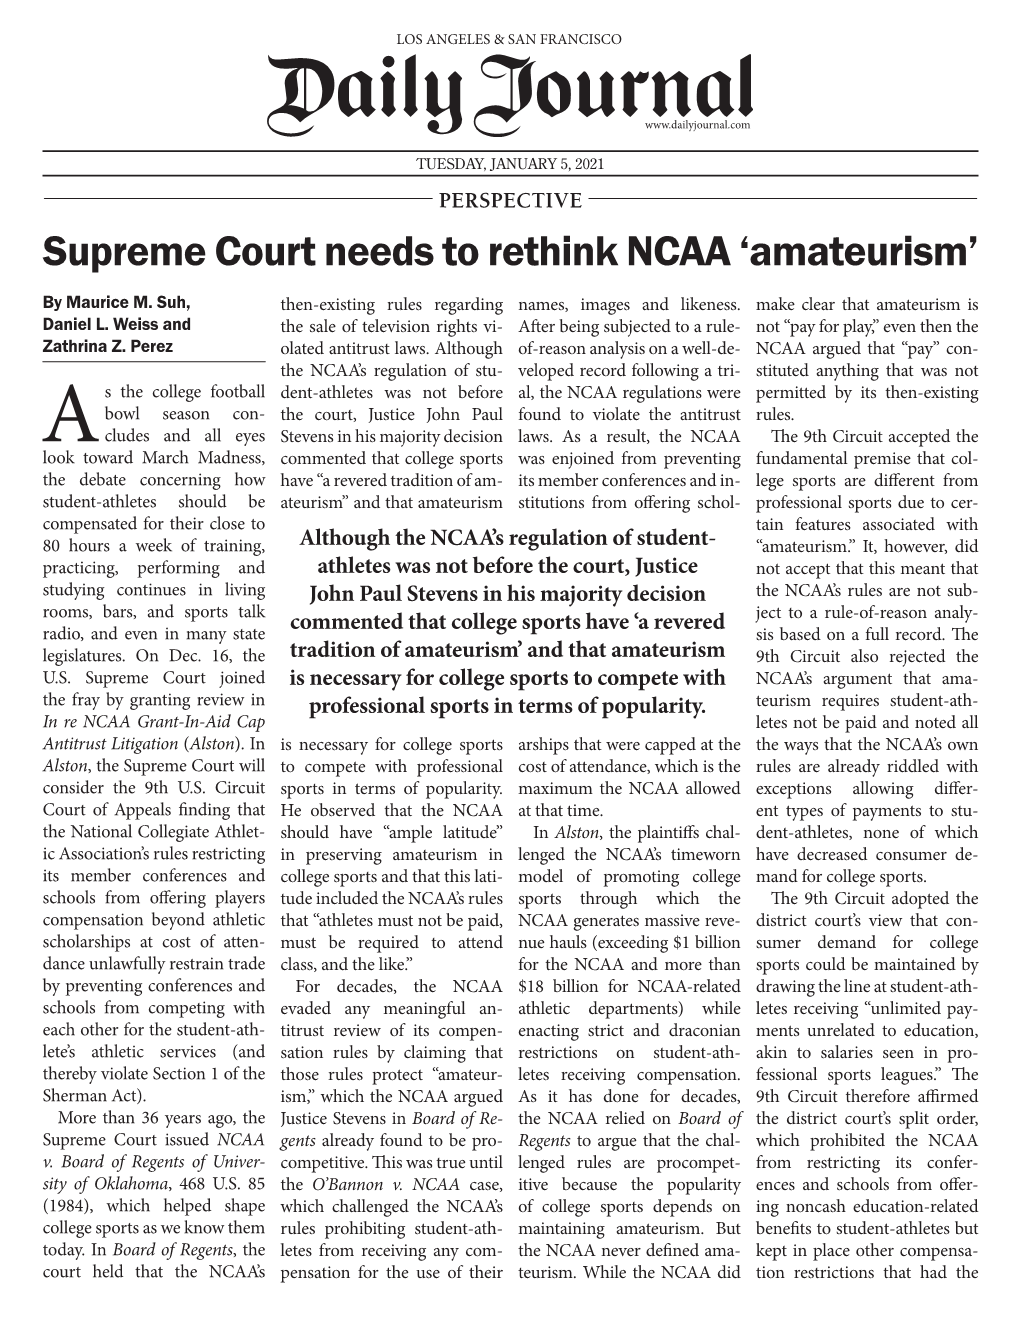 Supreme Court Needs to Rethink NCAA 'Amateurism'